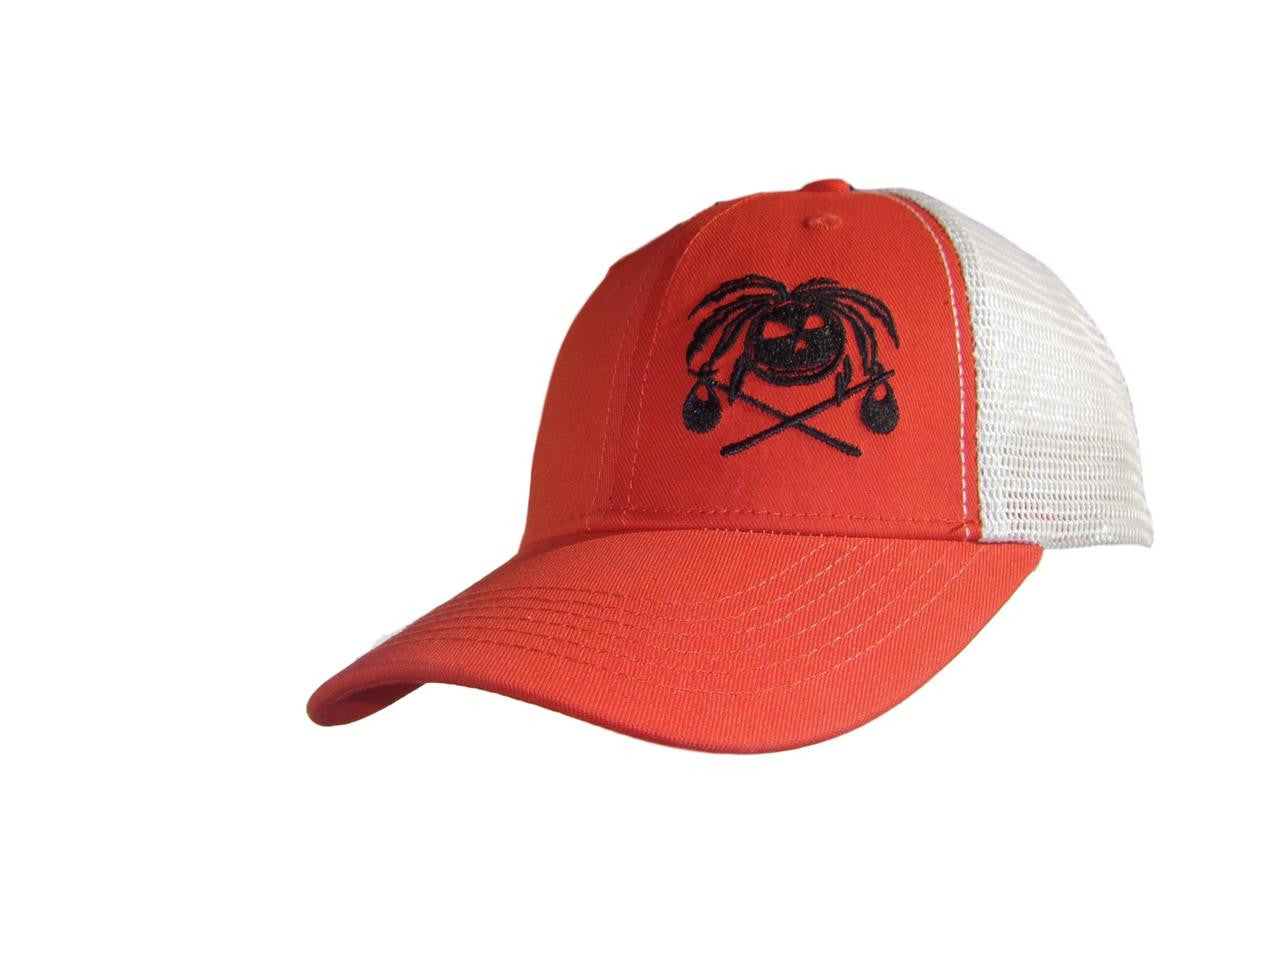 Coconut Head trucker baseball cap red FREE SHIPPING USA